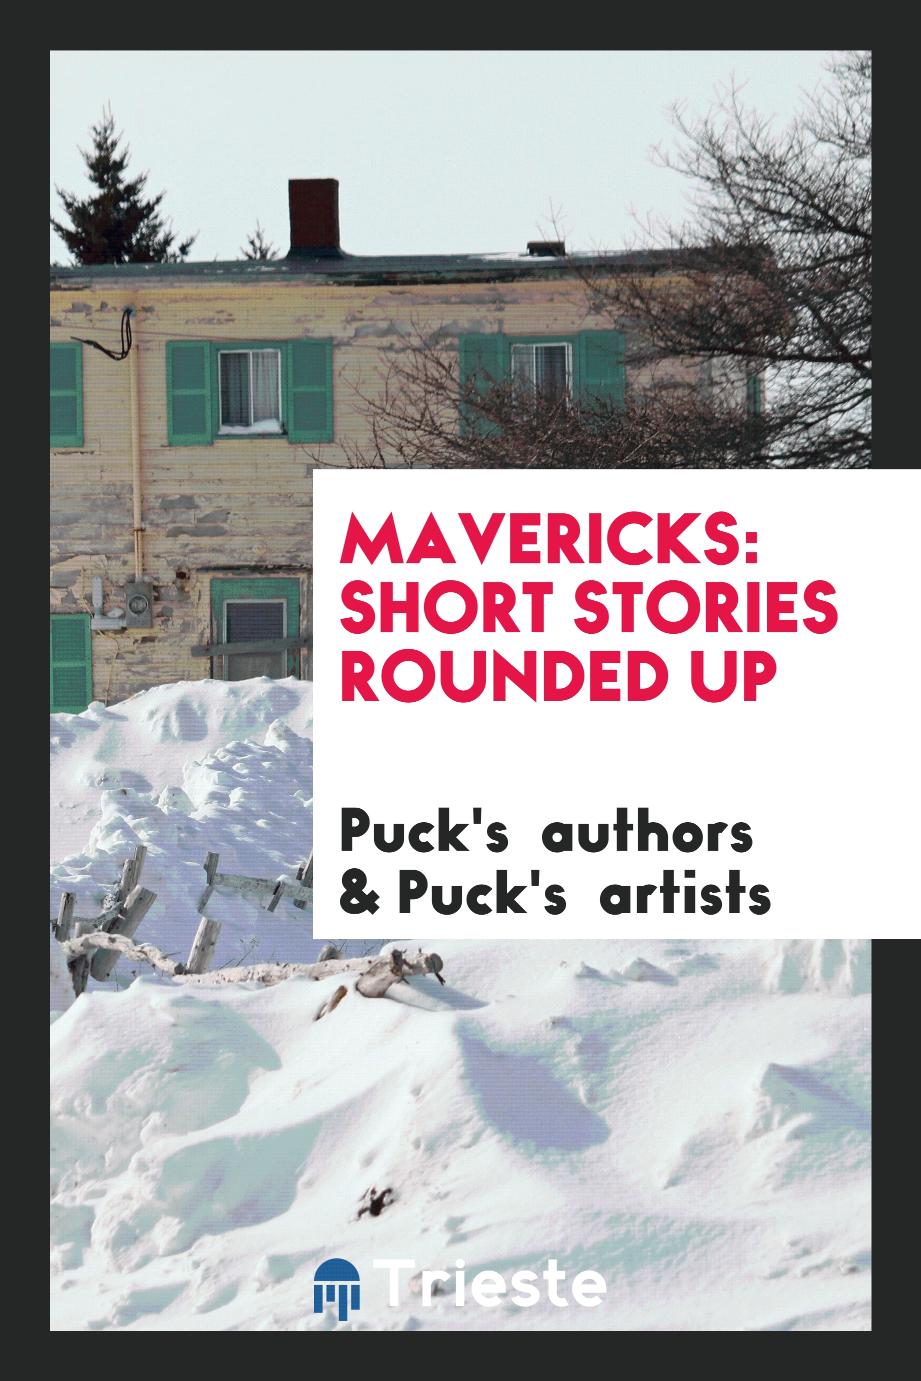 Mavericks: short stories rounded up